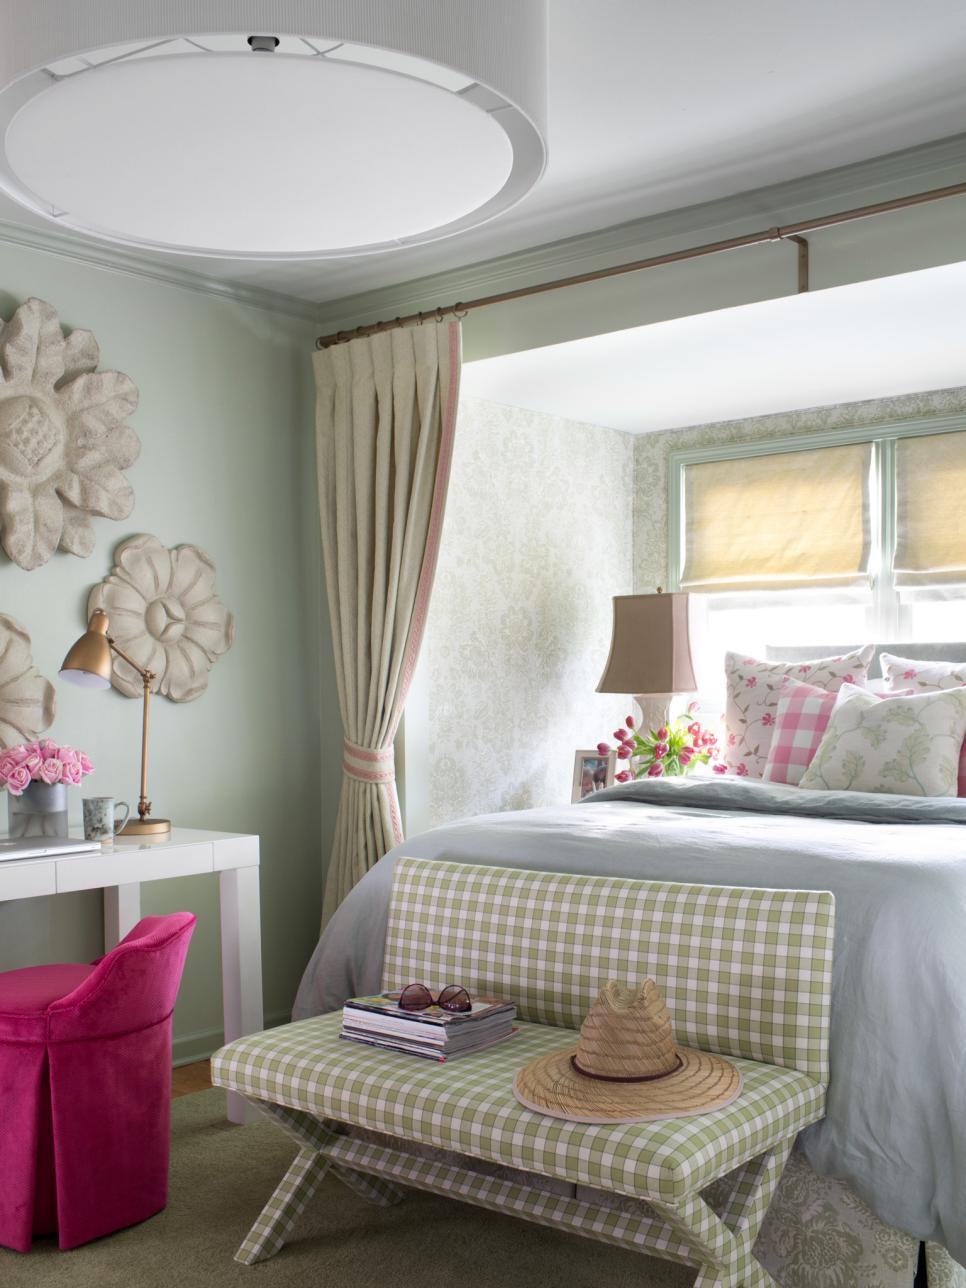 25 Beach Style Bedroom Design Ideas - Decoration Love